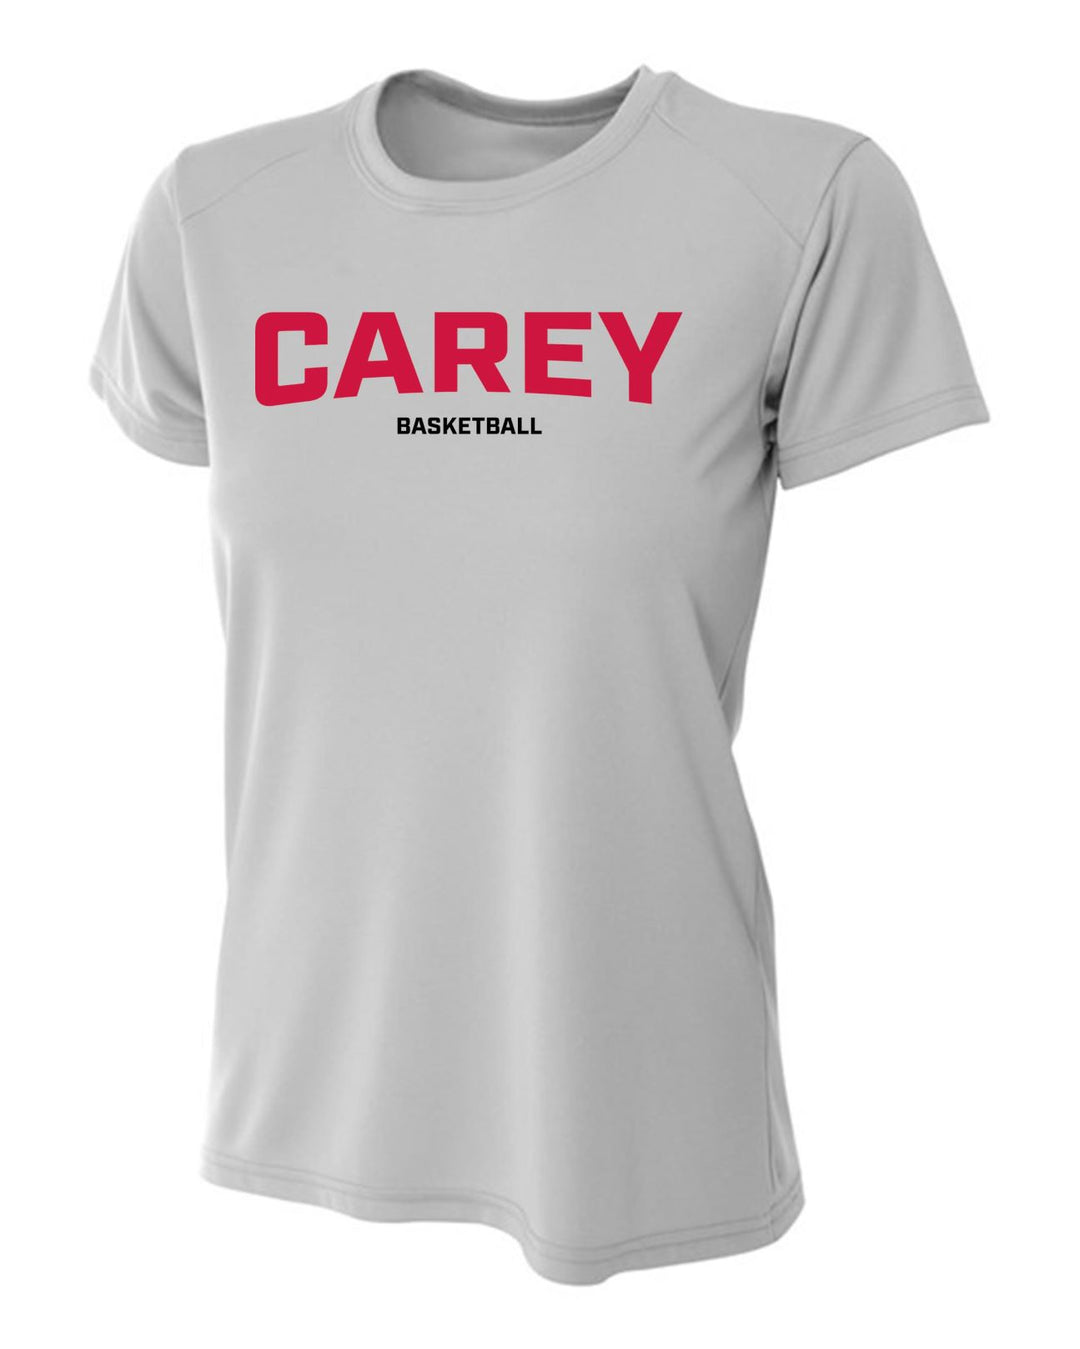 WCU Basketball Women's Short-Sleeve Performance Shirt WCU Basketball Silver CAREY - Third Coast Soccer